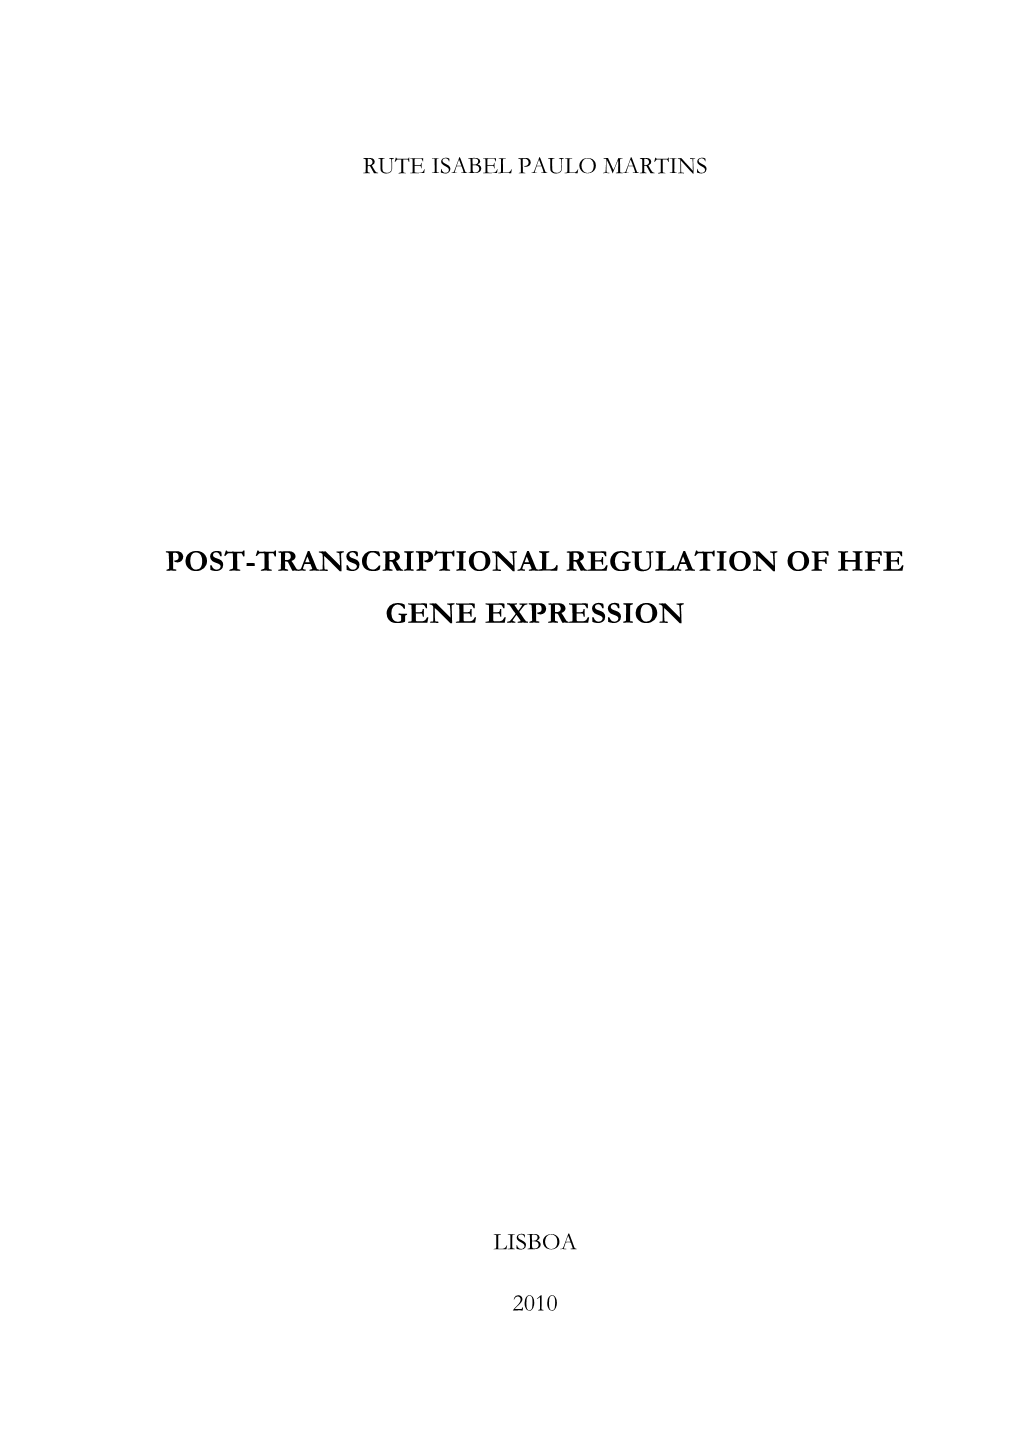 Post-Transcriptional Regulation of Hfe Gene Expression